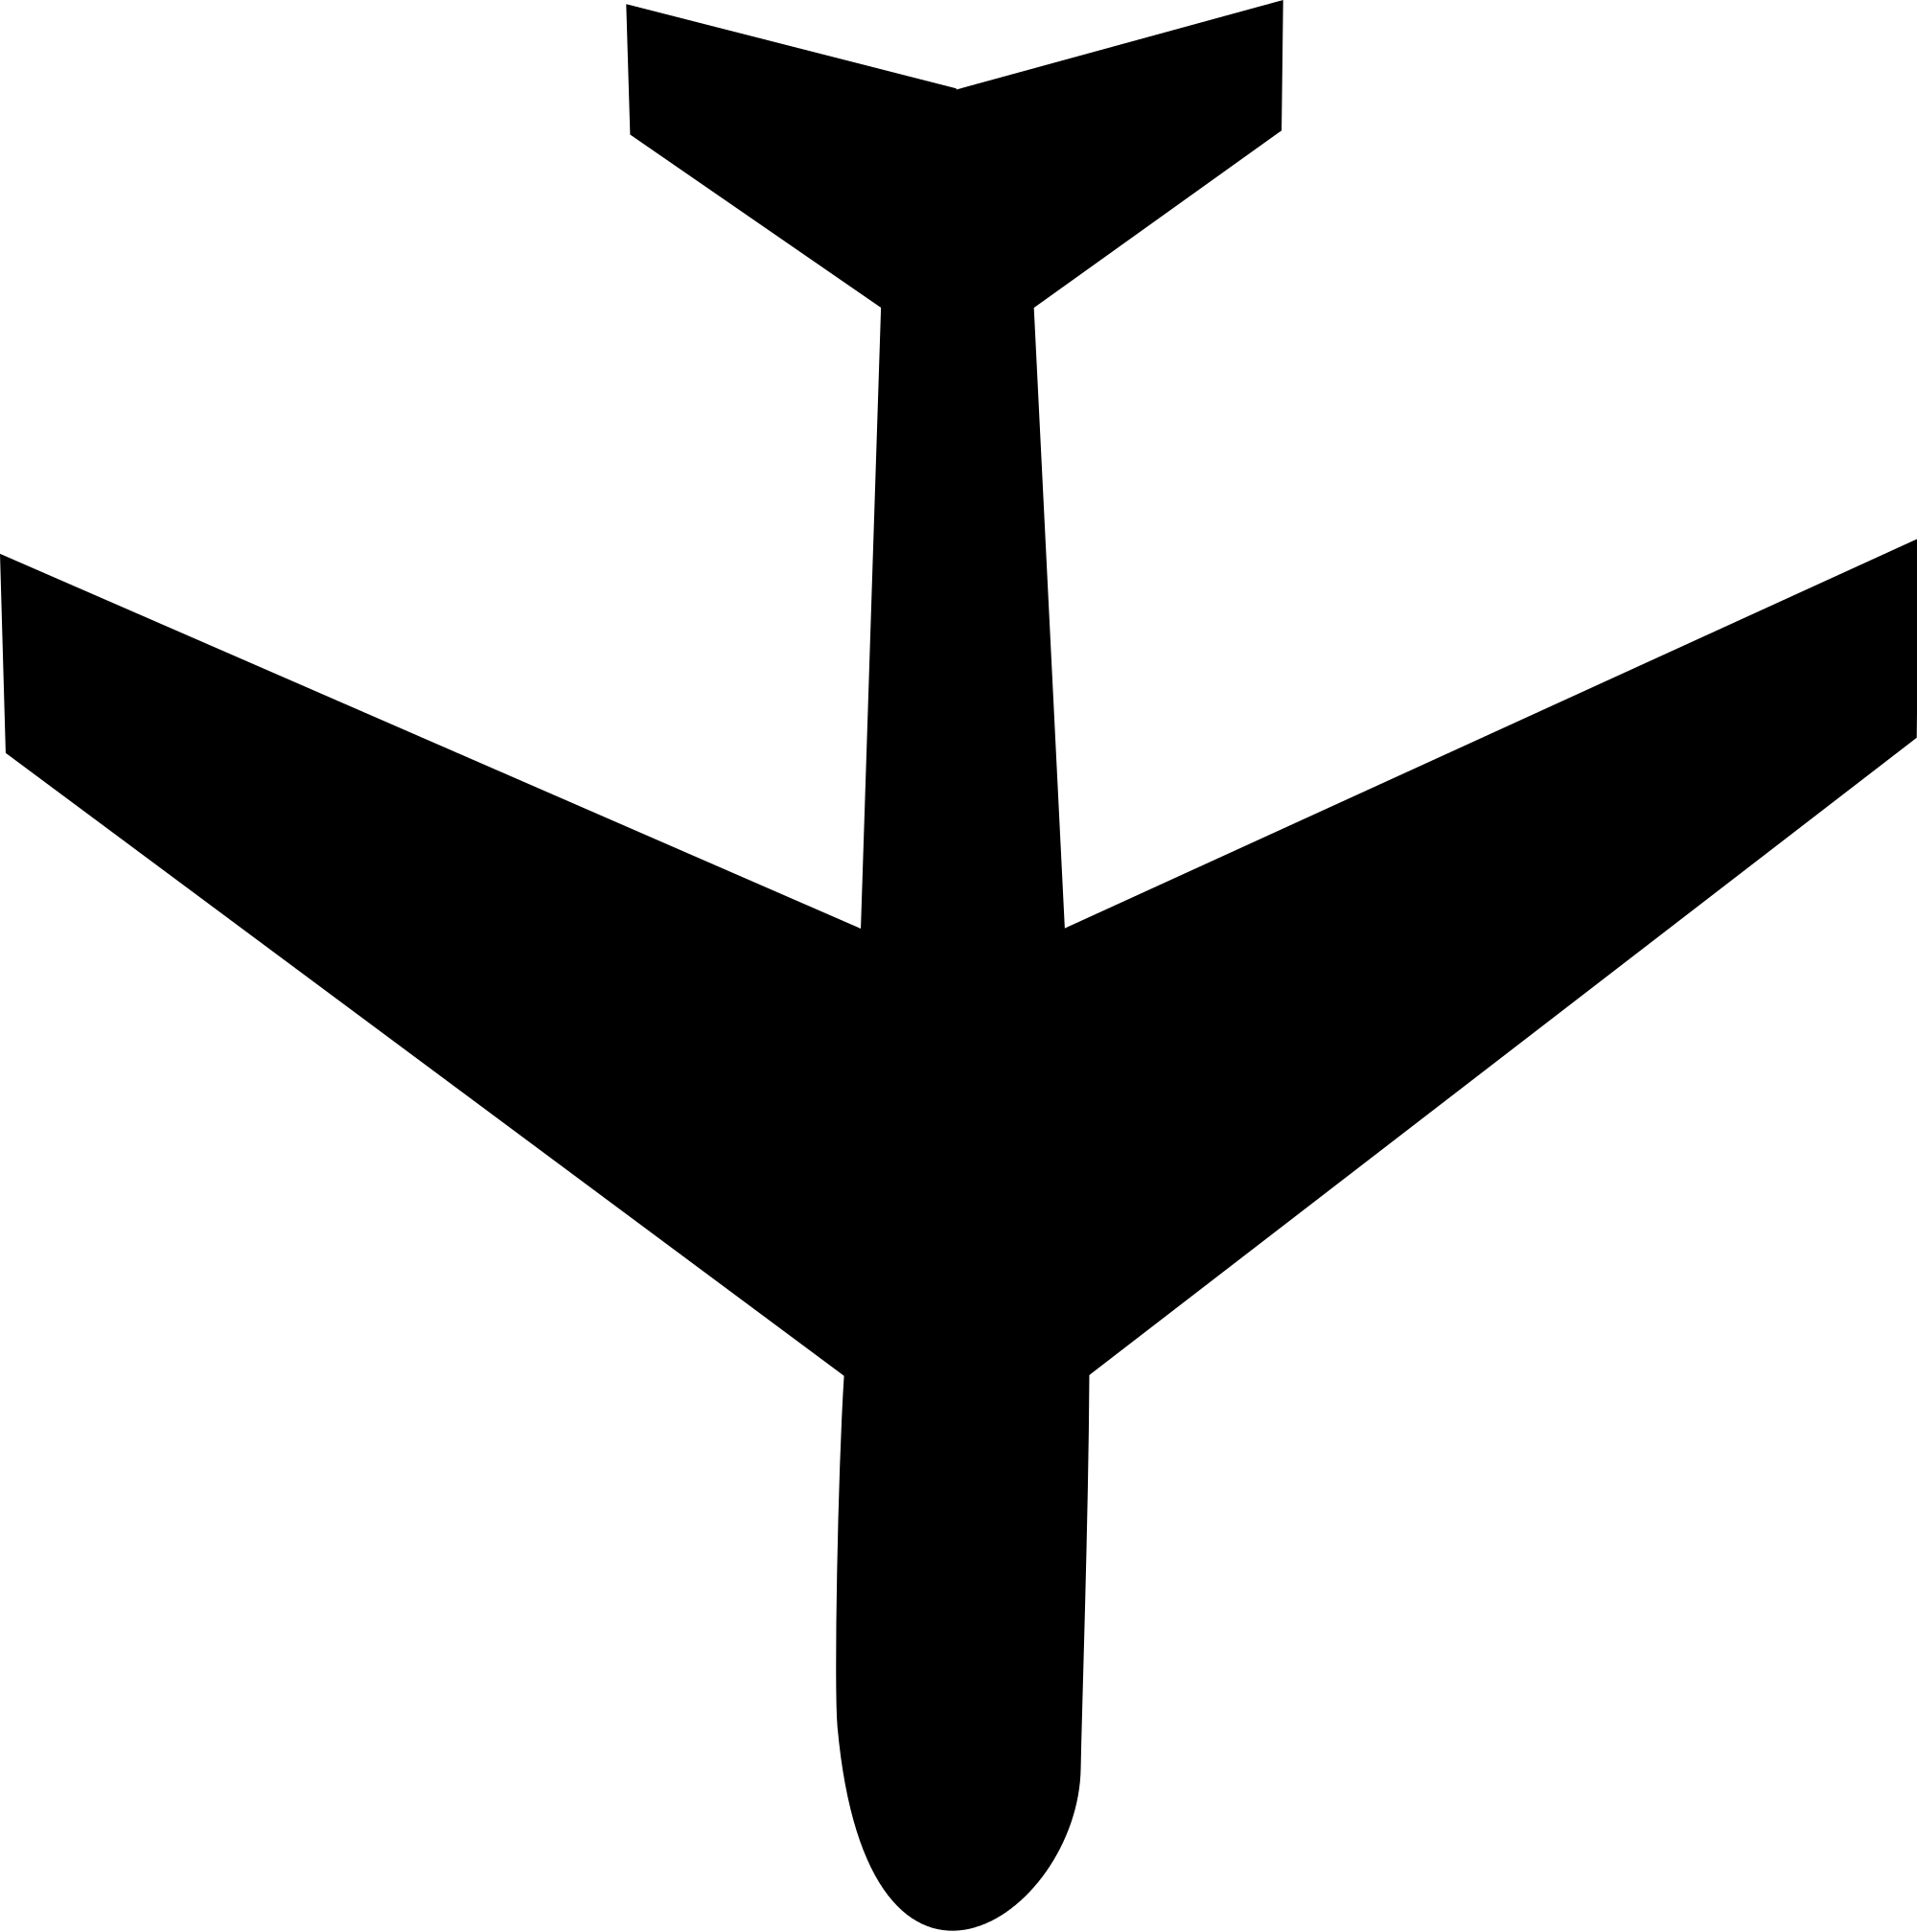 Normal Distribution Histogram Icon - Normalverteilung Icon (2000x2016)